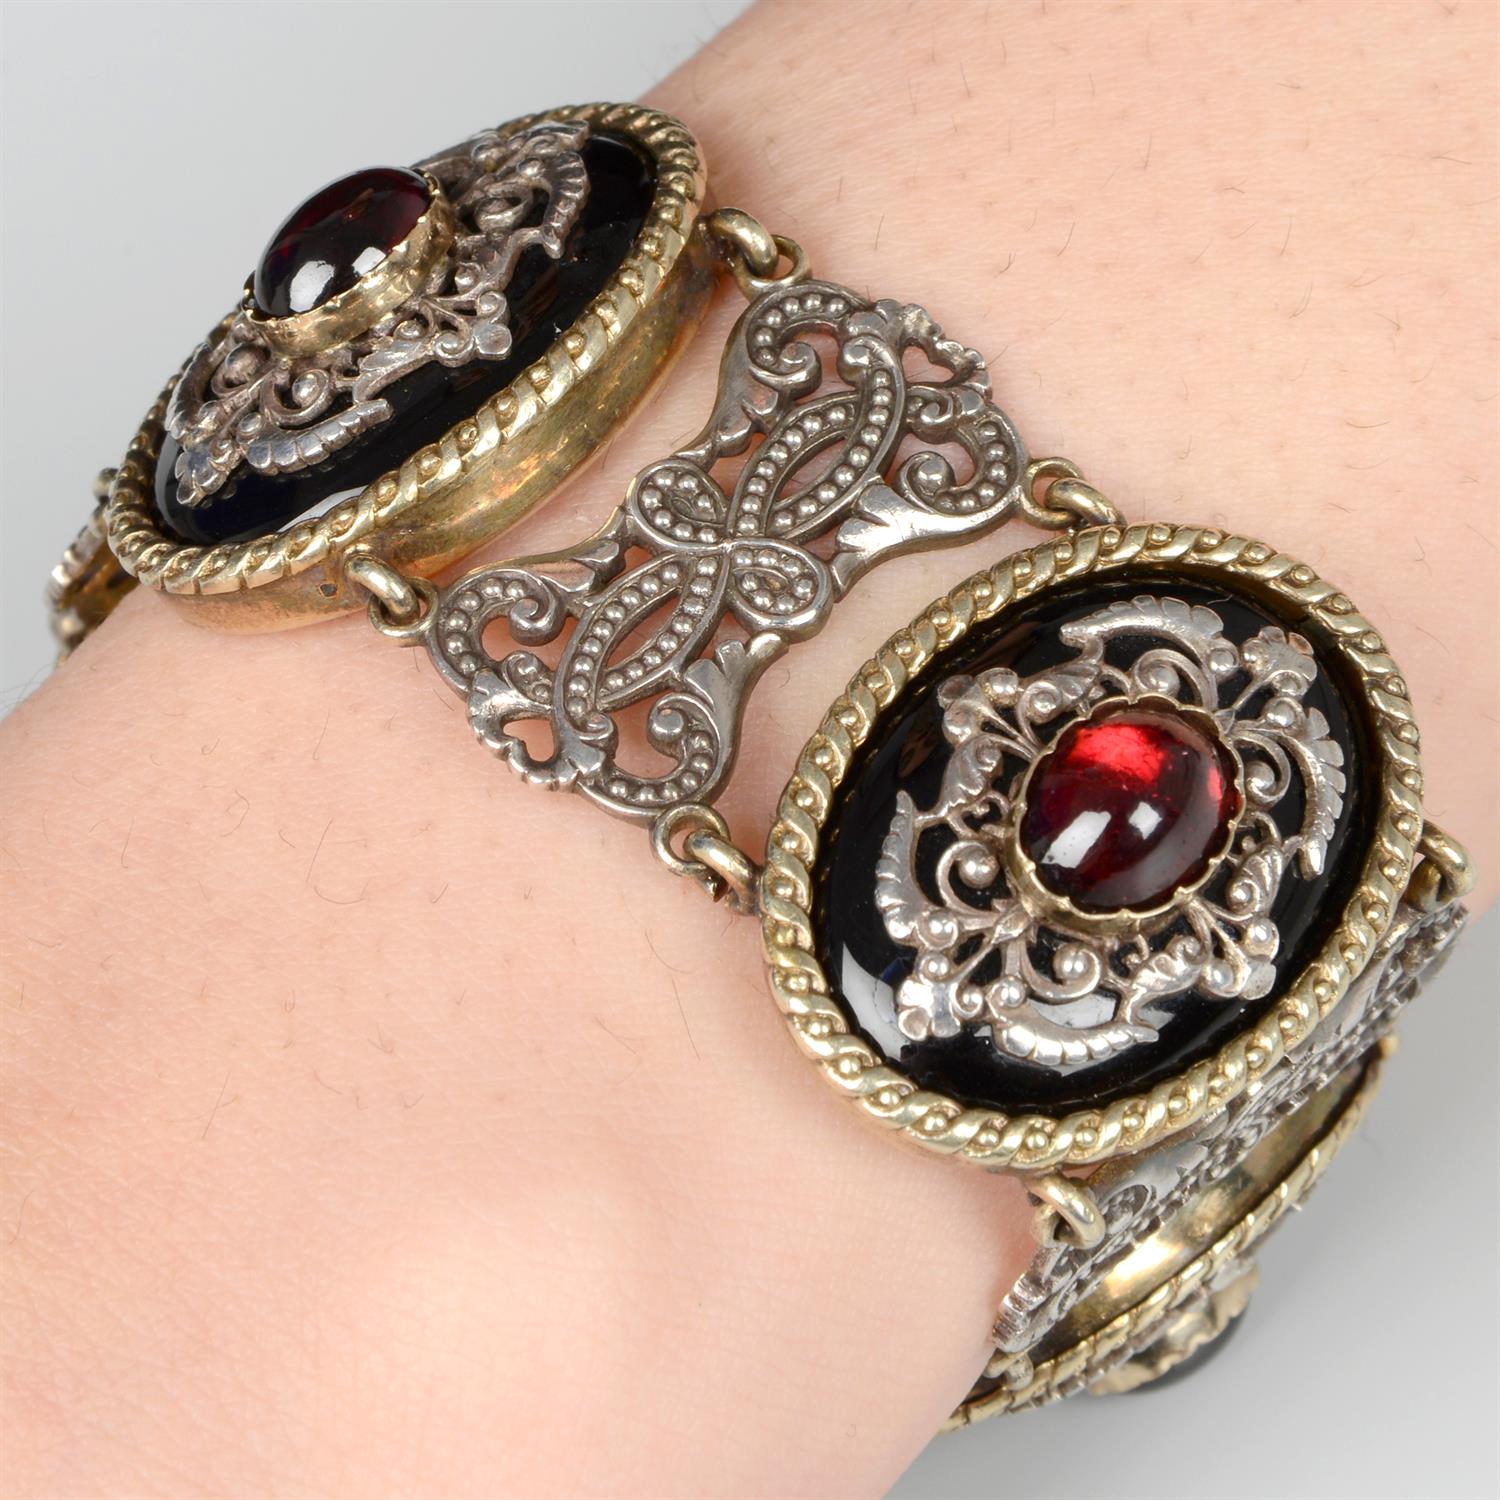 Silver and gold, garnet and enamel bracelet, J. Wiese